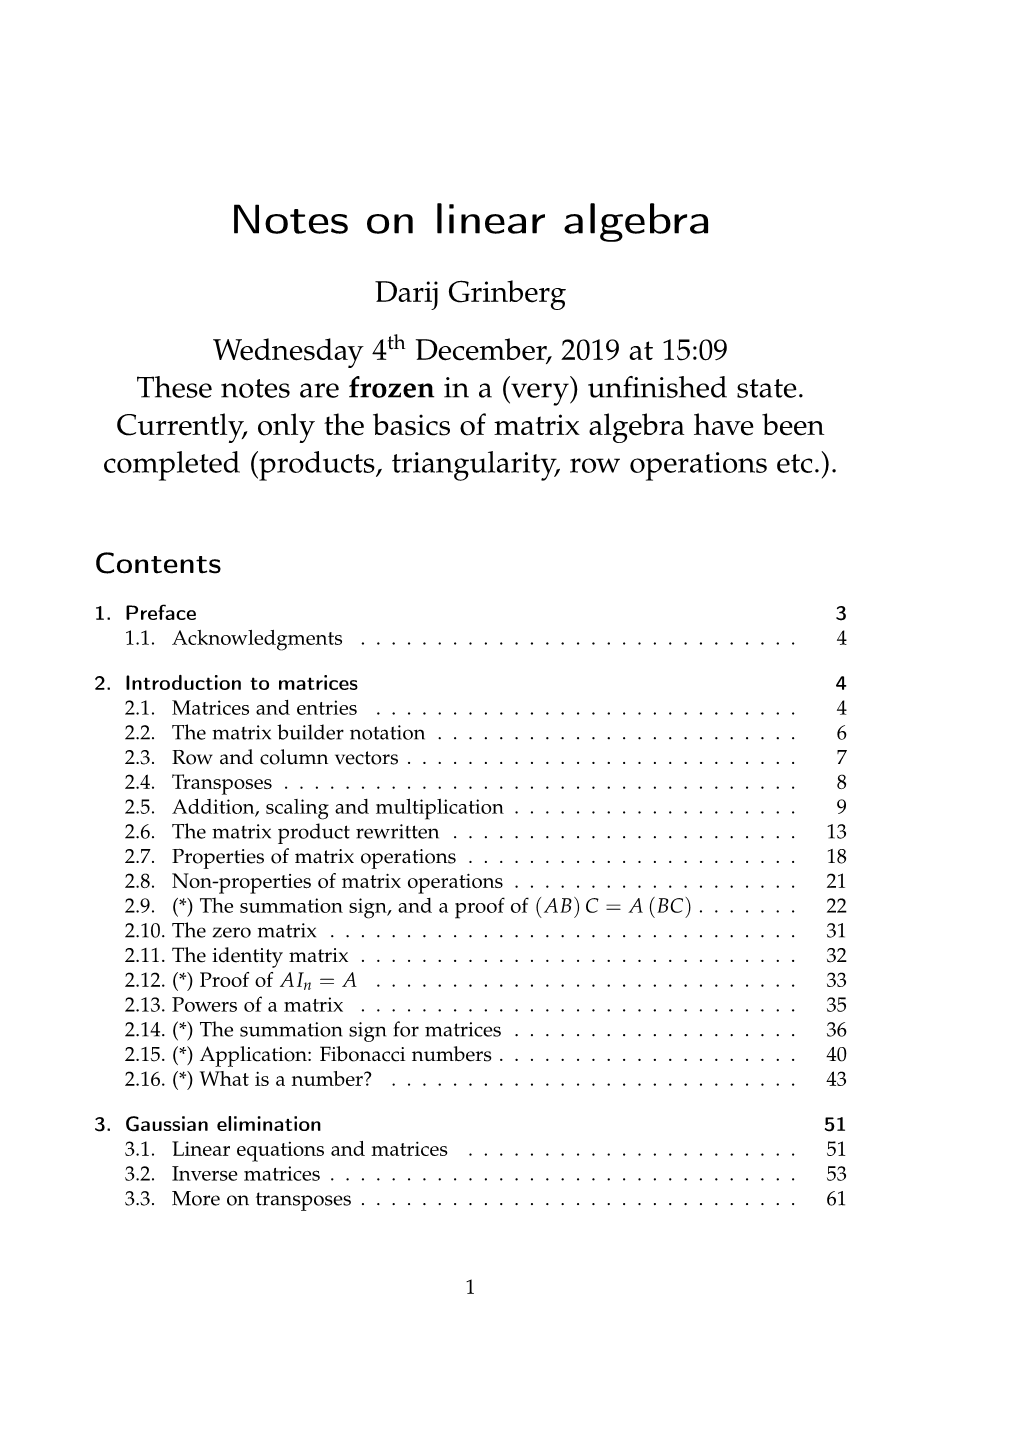 Darij Grinberg, Notes on Linear Algebra